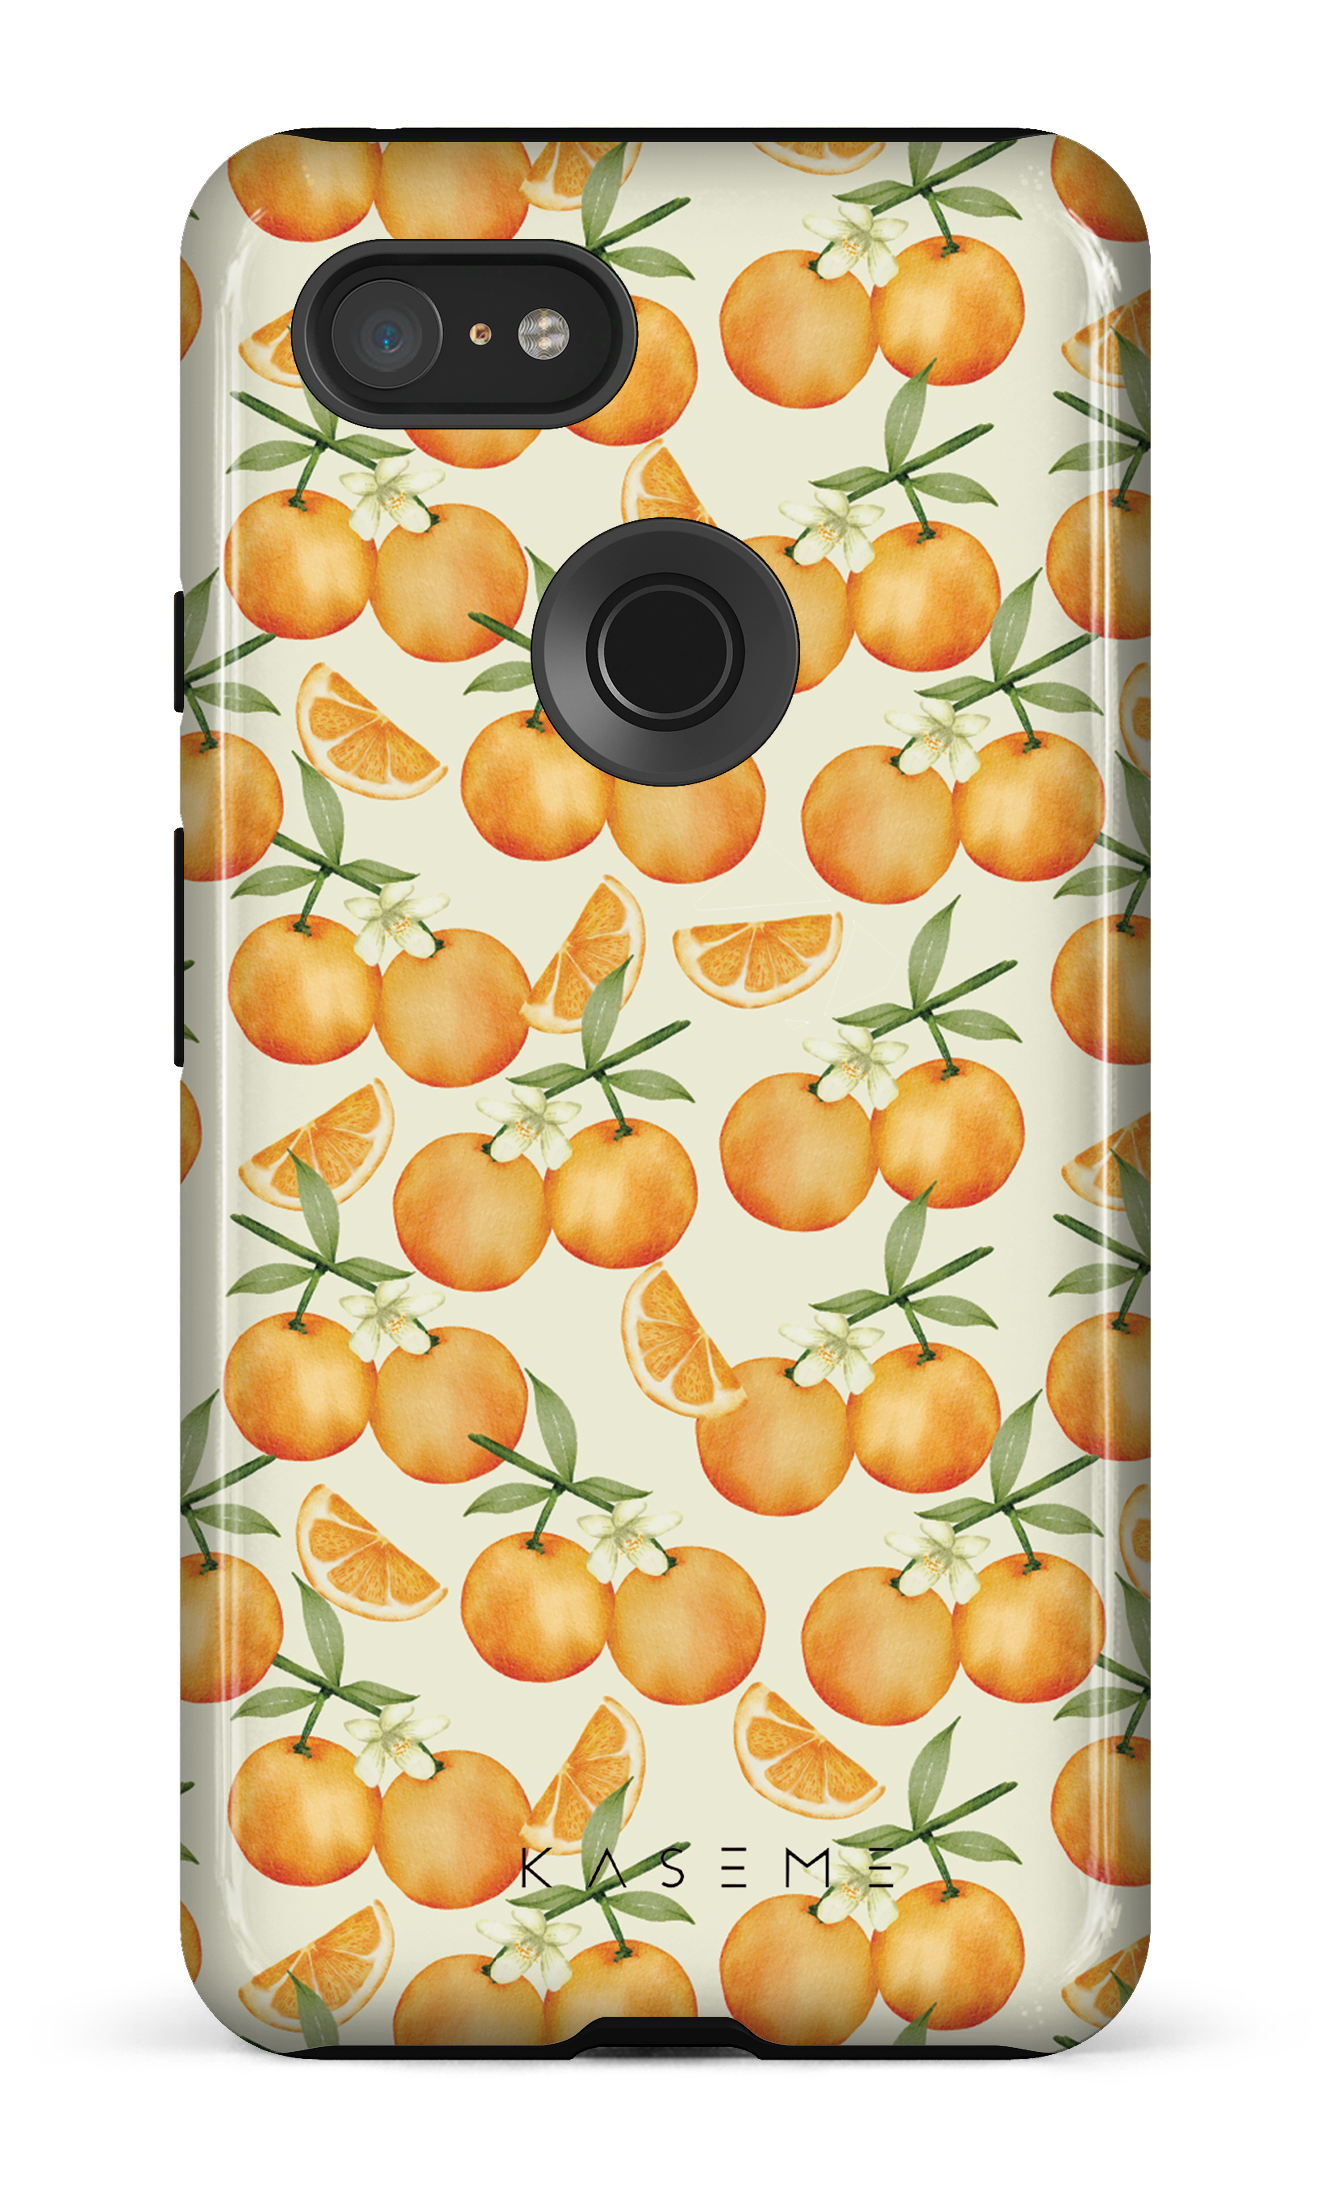 Tangerine - Google Pixel 3 XL